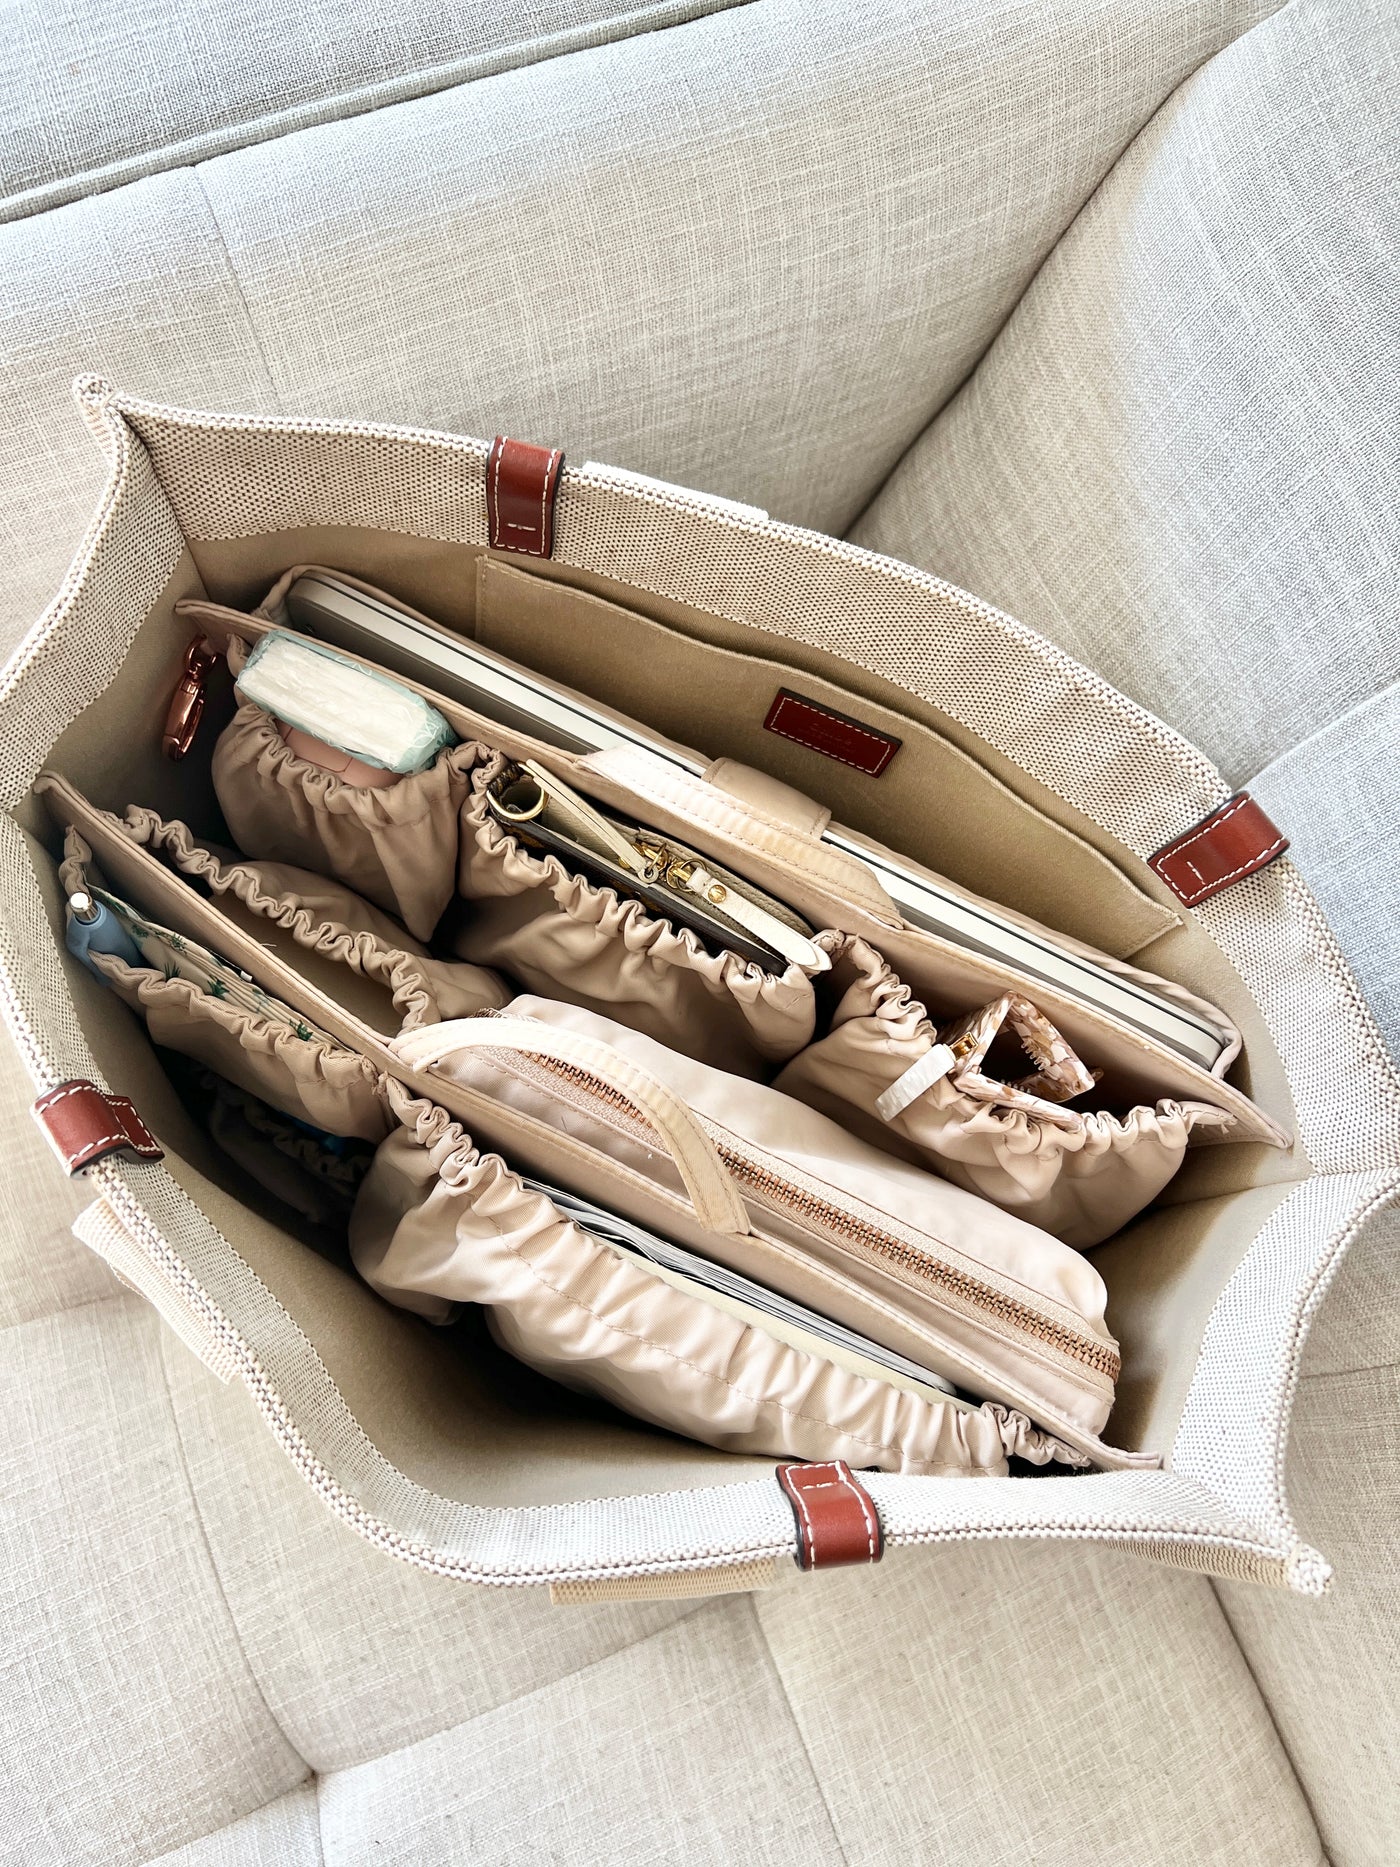 tote bag organizer with zipper